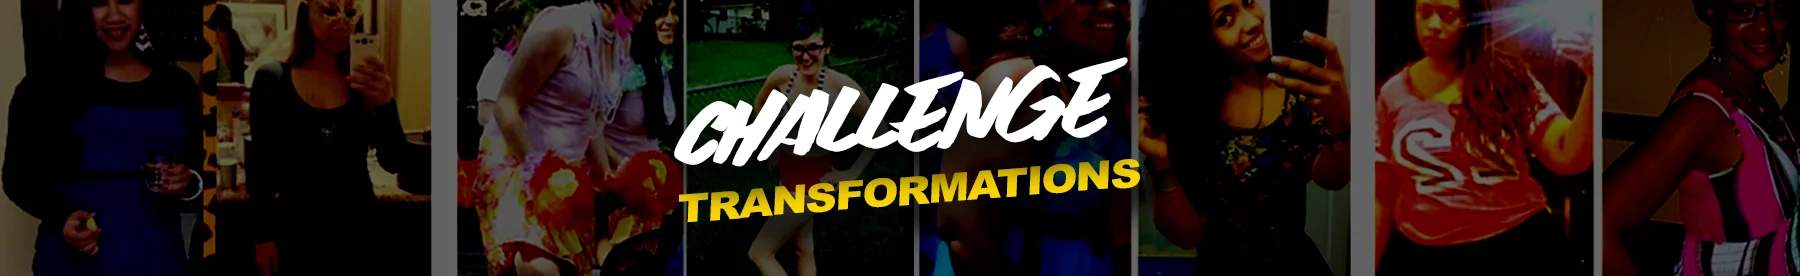 Challenge Transformations